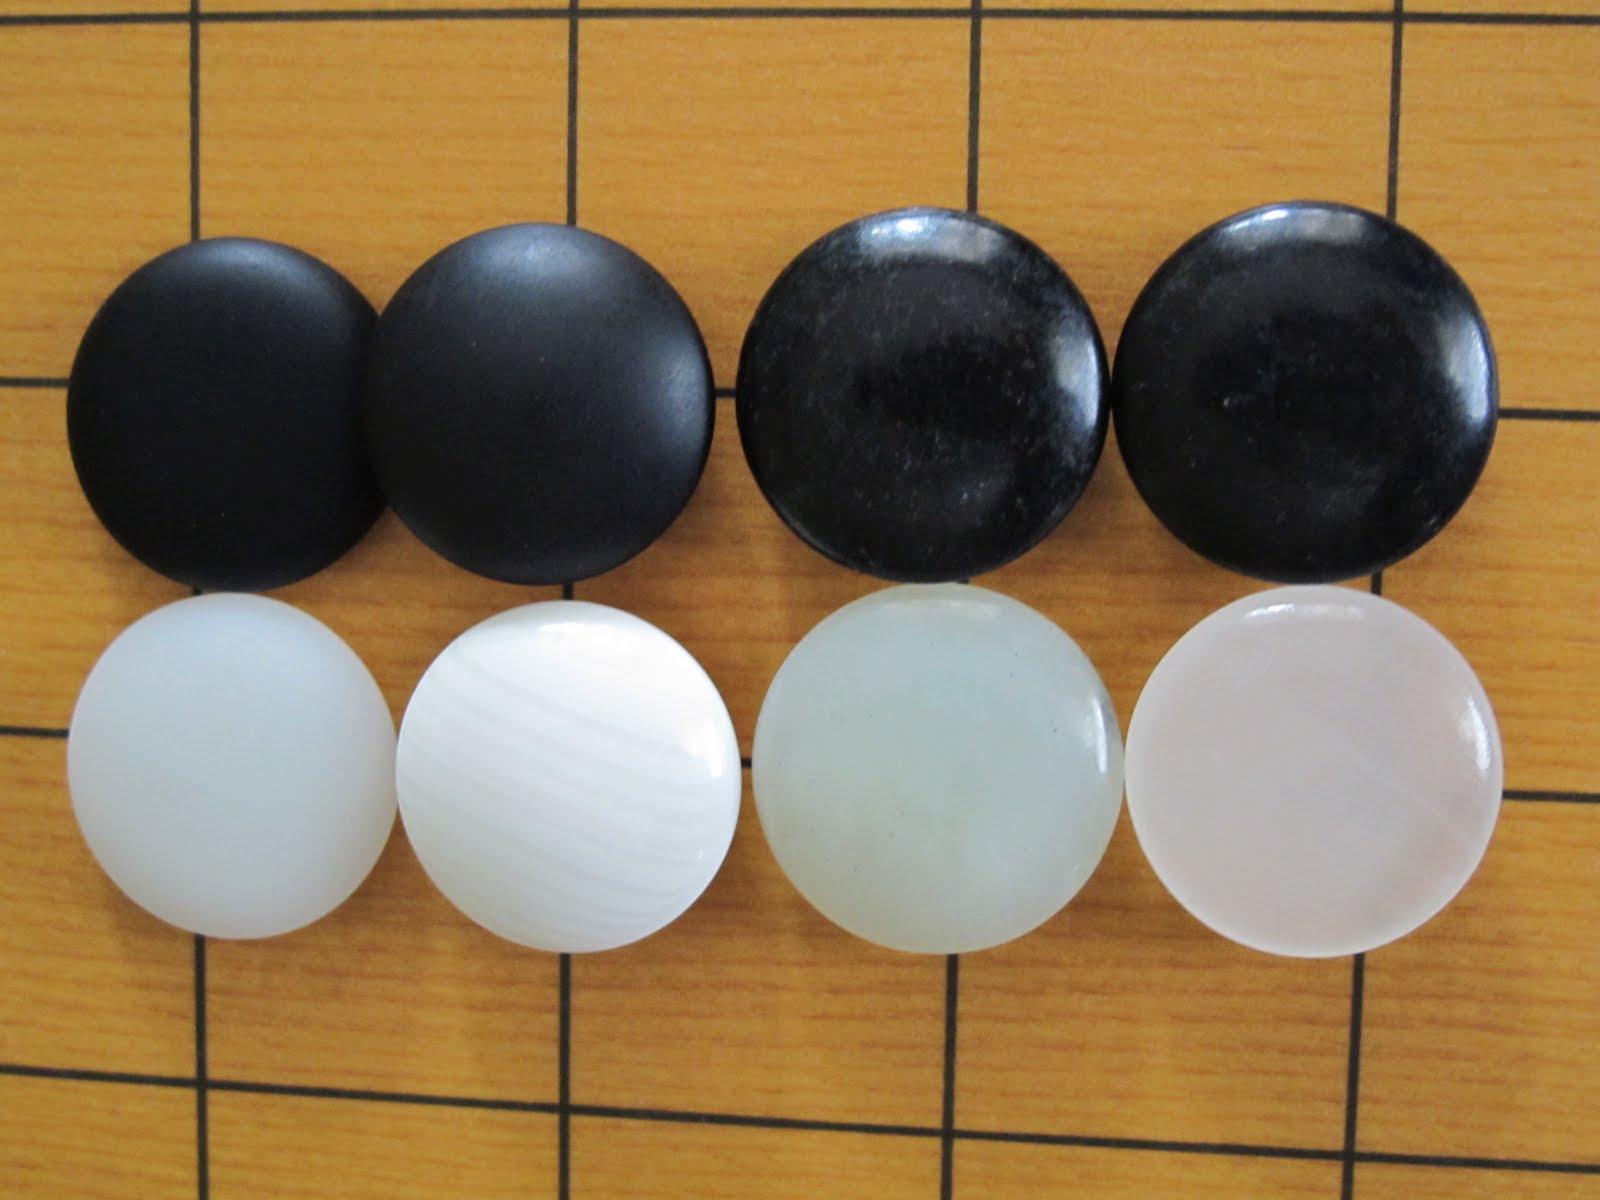 From left to right: Yunzi, Slate & Shell, Jade Set (Green), Jade Set (White)